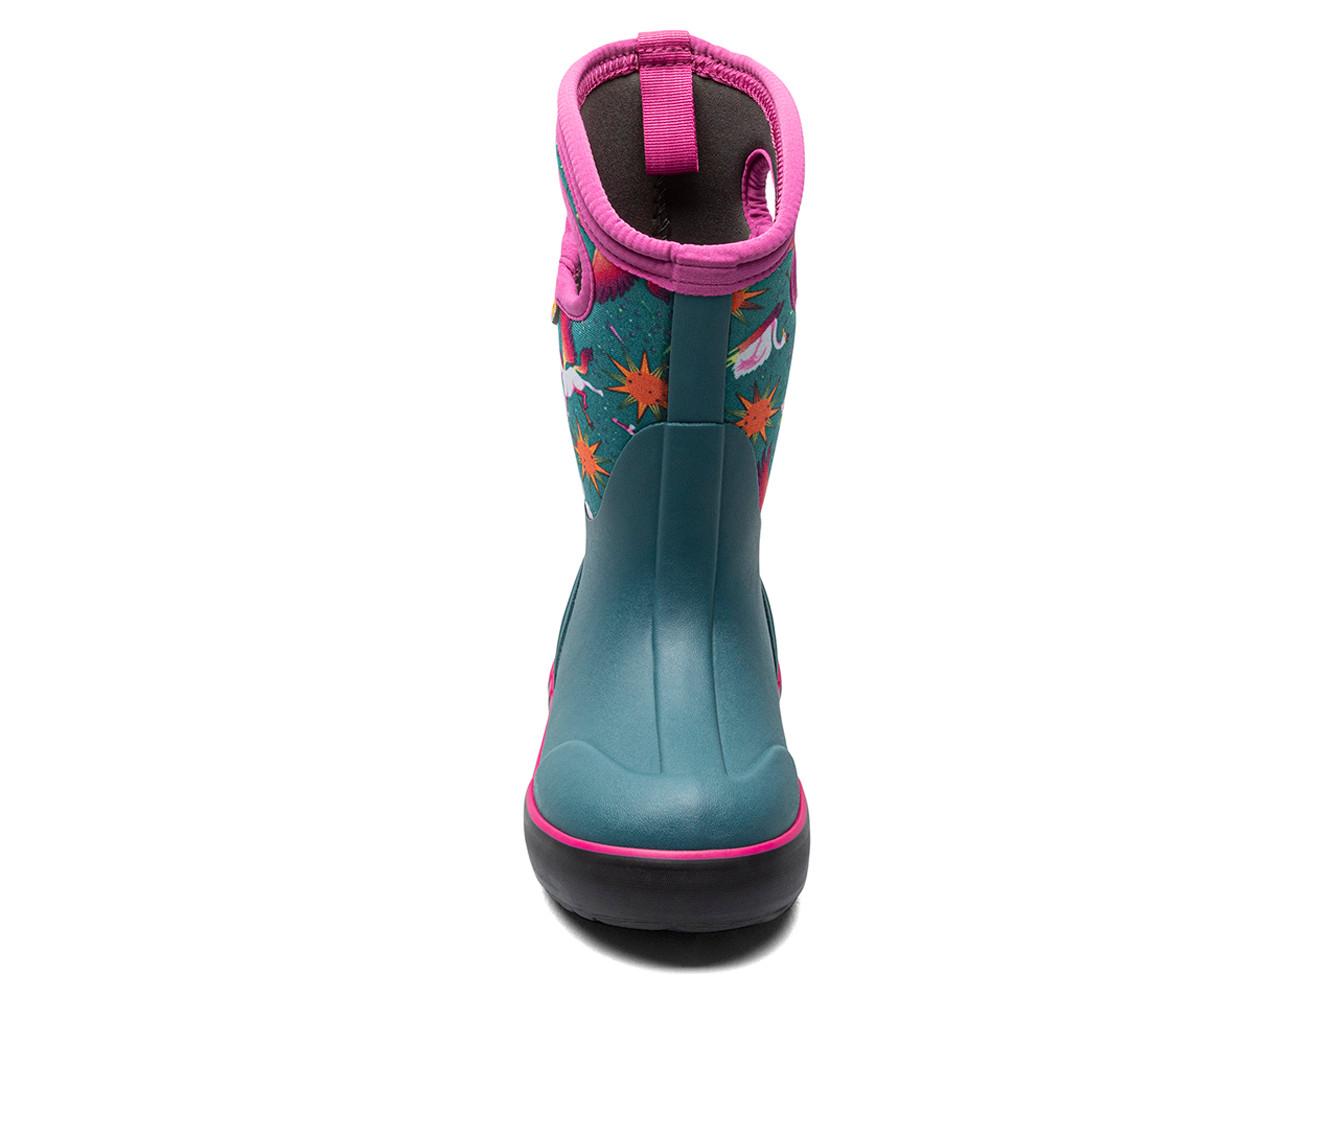 Girls' Bogs Footwear Toddler & Little Kid Classic II Space Pigs Winter Boots